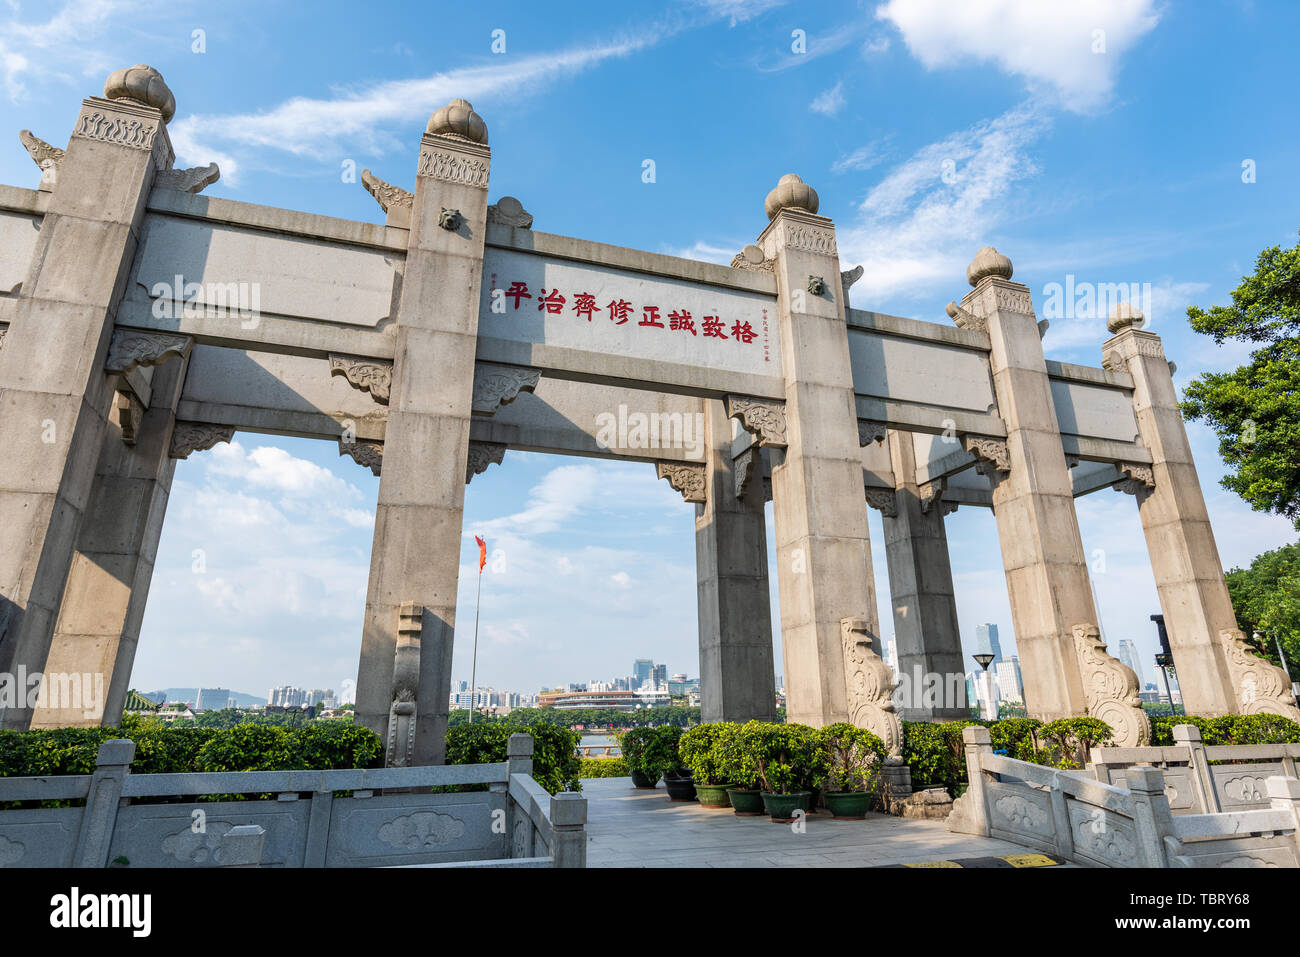 Archway of Sun Yat-sen University, Guangzhou Stock Photo